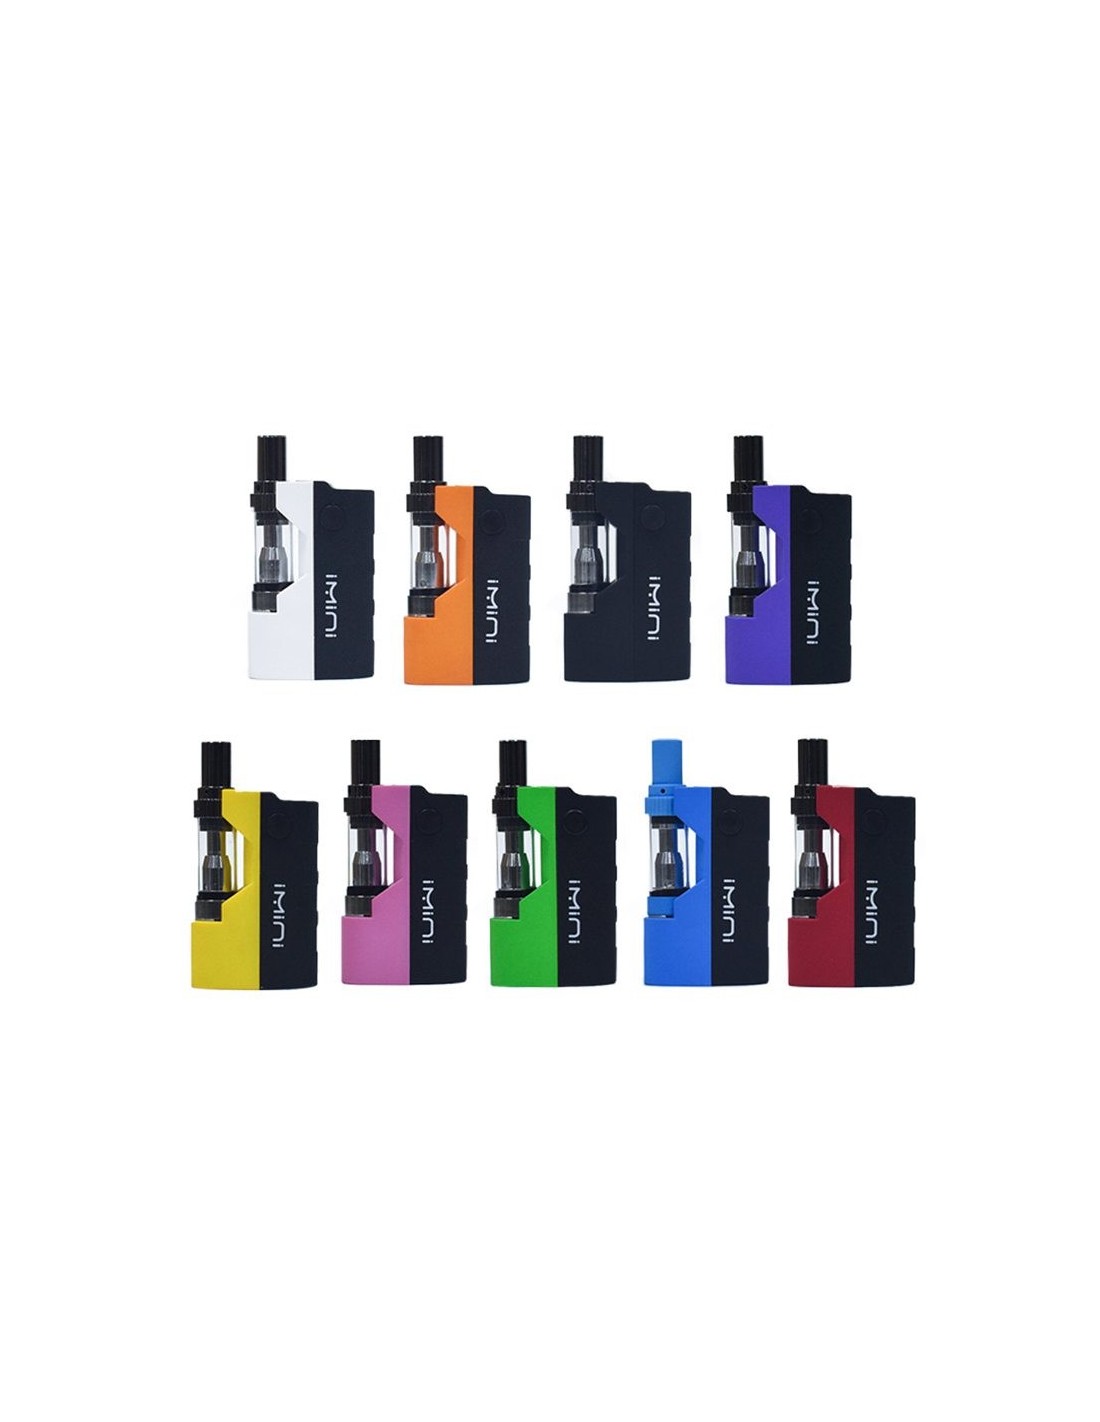 Imini V2 Pro Vape Pen Kit 510 Thread Battery for CBD Oil/THC/Wax 650mAh is ...